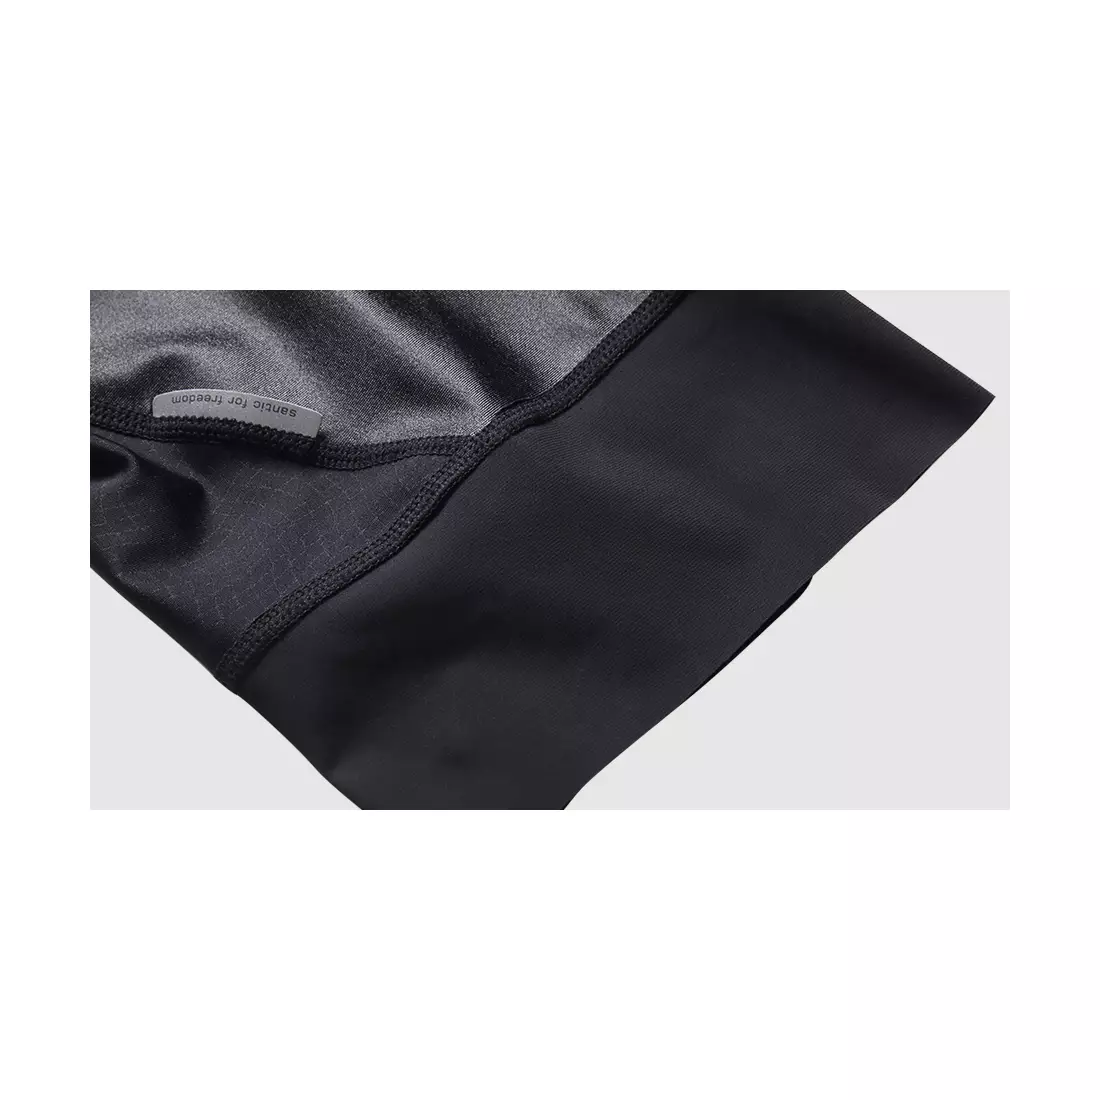 SANTIC T-Breathing šortky s náprsenkou, čierne